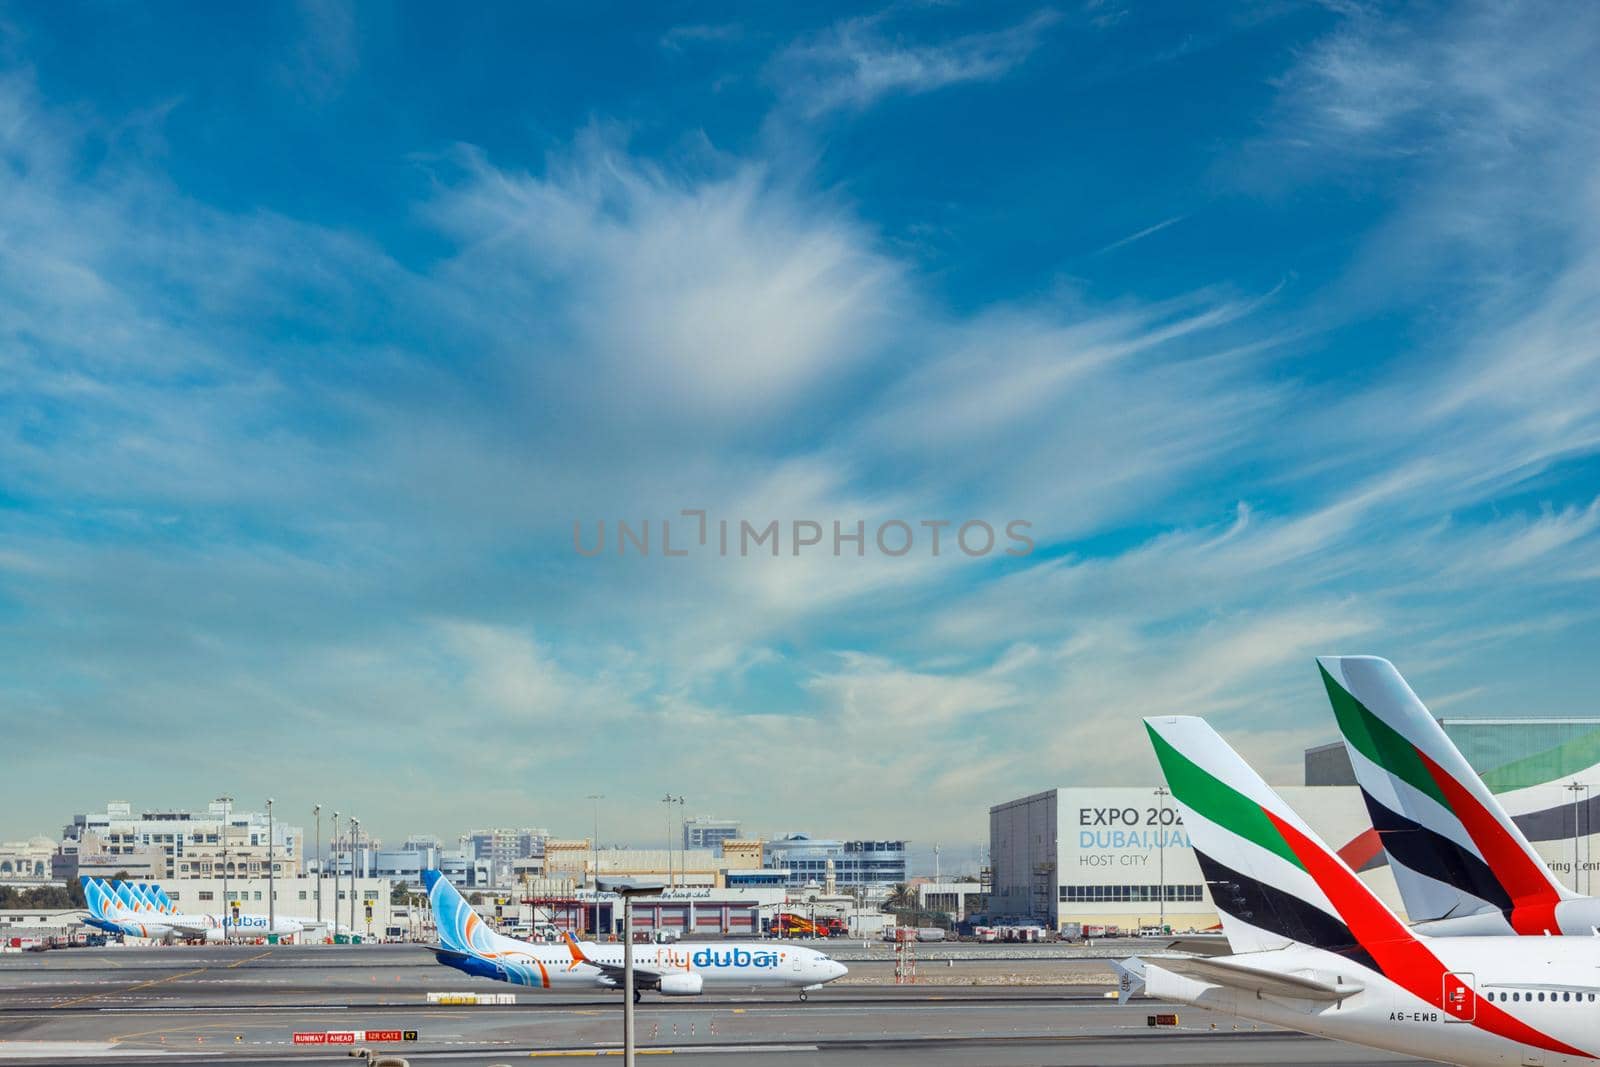 DUBAI, UAE - CIRCA 2021: DUBAI, UAE - CIRCA 2021: Emirates Airline and FlyDubai Airline Airplanes parked on Dubai Airport, on cloudy sky background. by dugulan